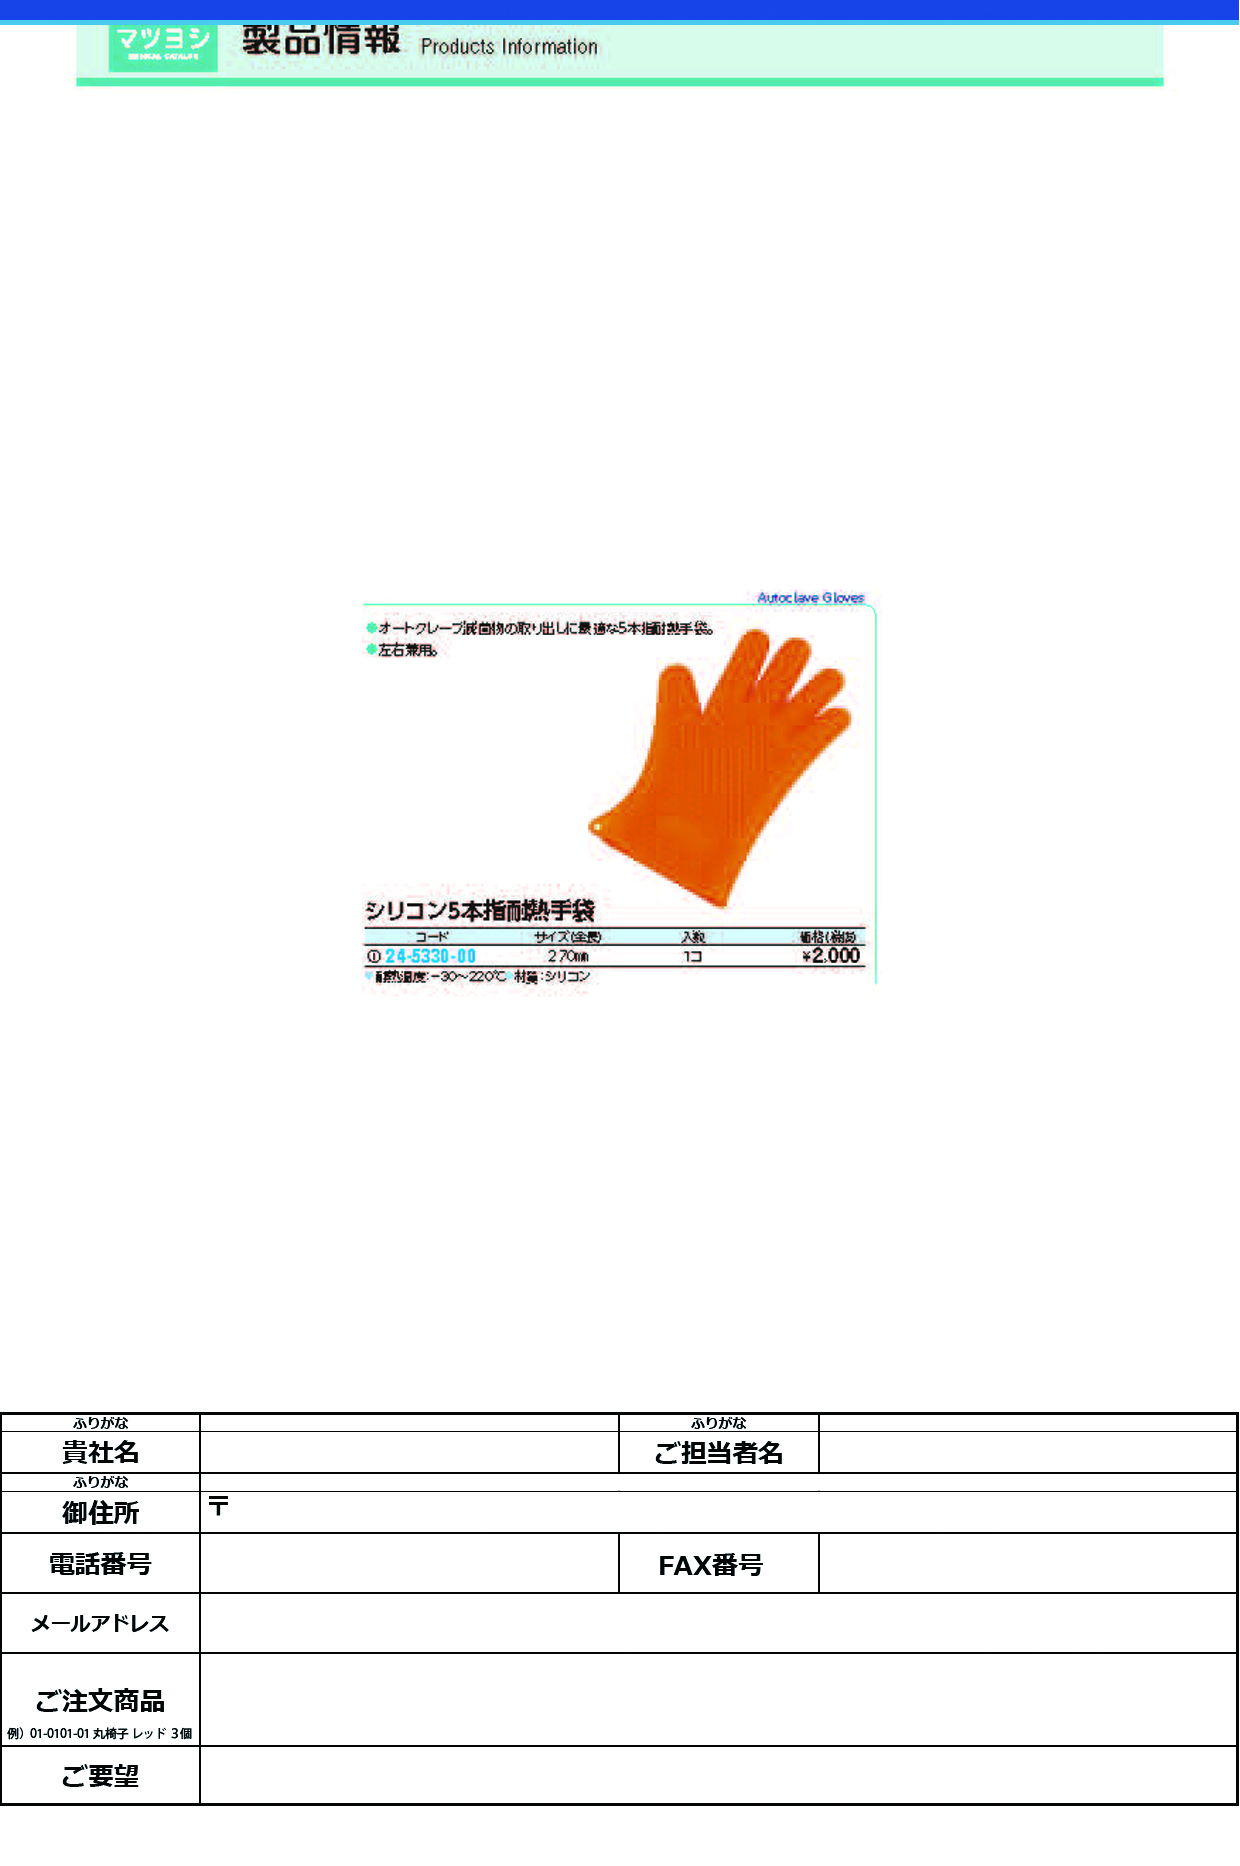 (24-5330-00)シリコン５本指耐熱手袋 270MM ｼﾘｺﾝ5ﾎﾝﾕﾋﾞﾀｲﾈﾂﾃﾌﾞｸﾛ【1個単位】【2019年カタログ商品】